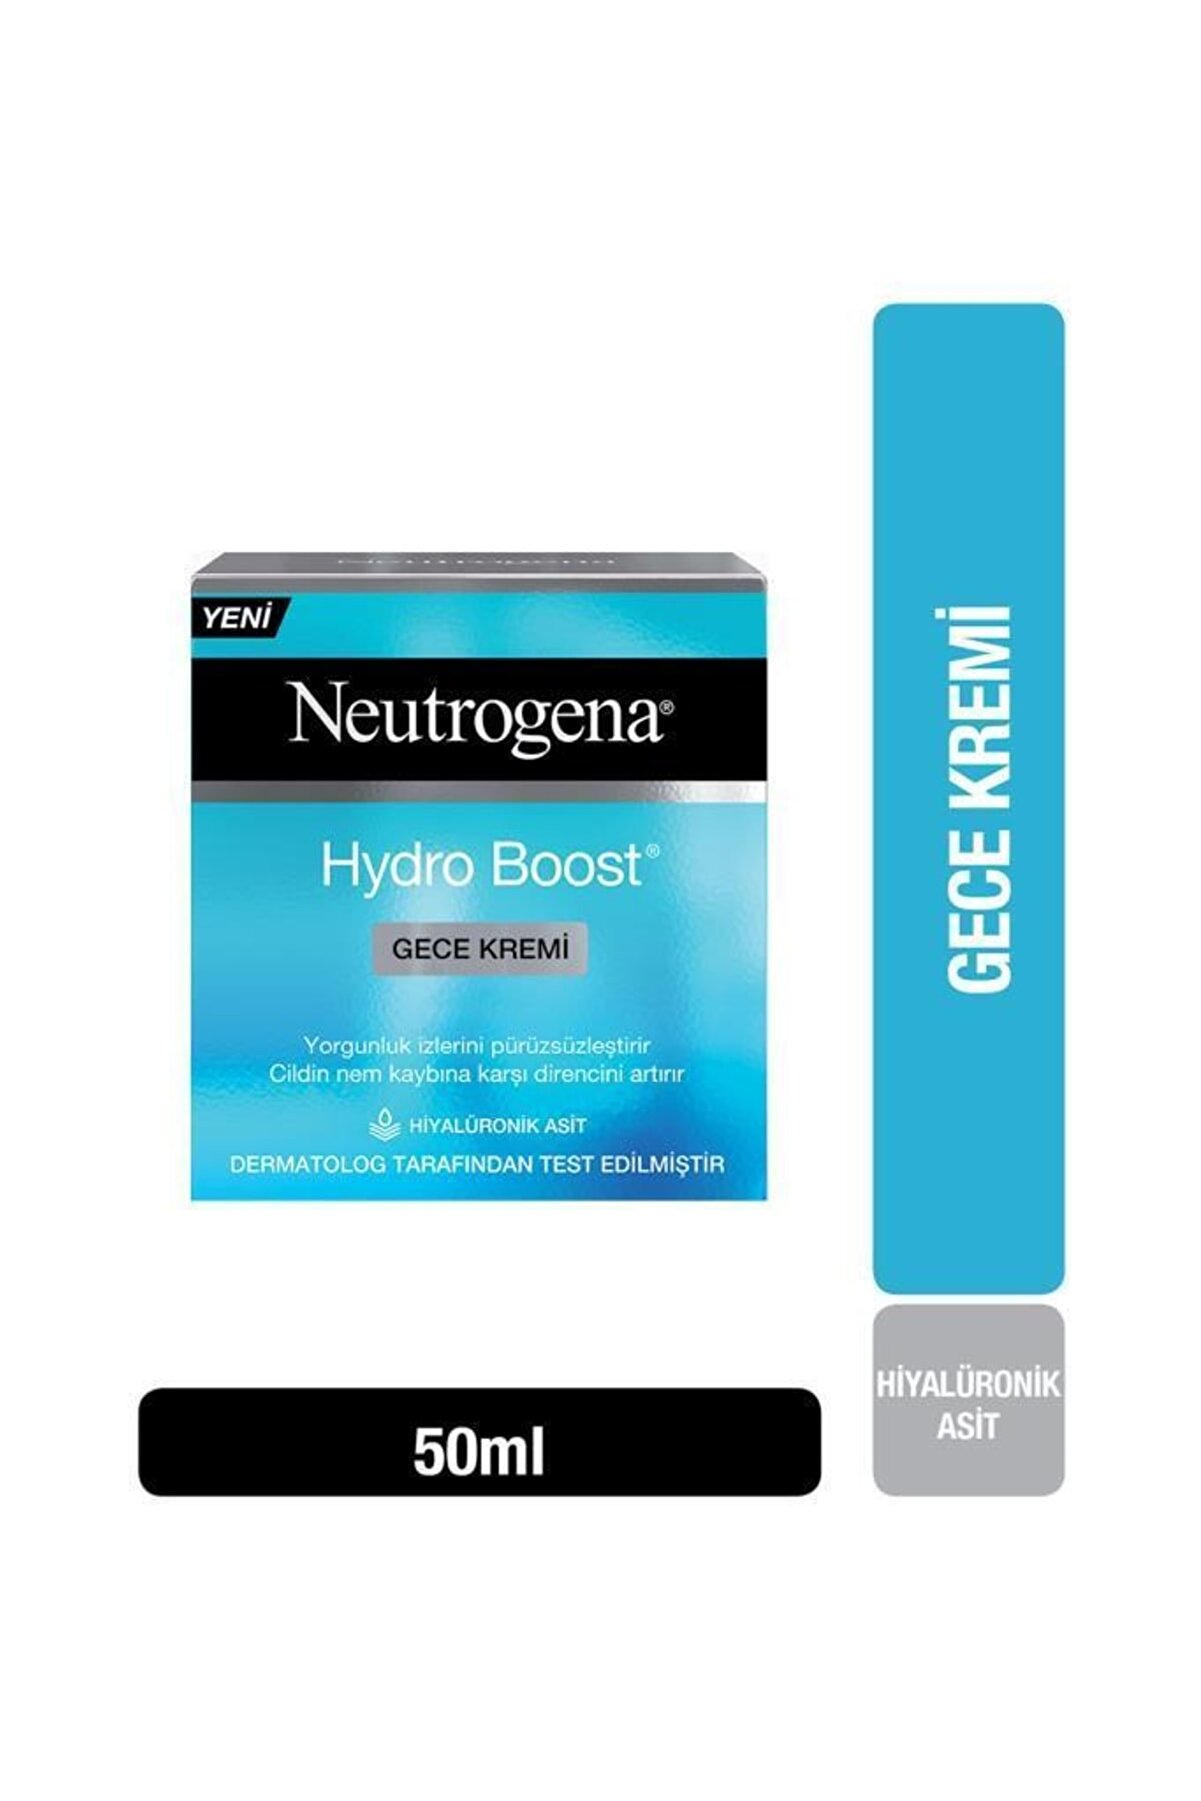 Neutrogena Hydro Boost Gece Kremi 50 ml